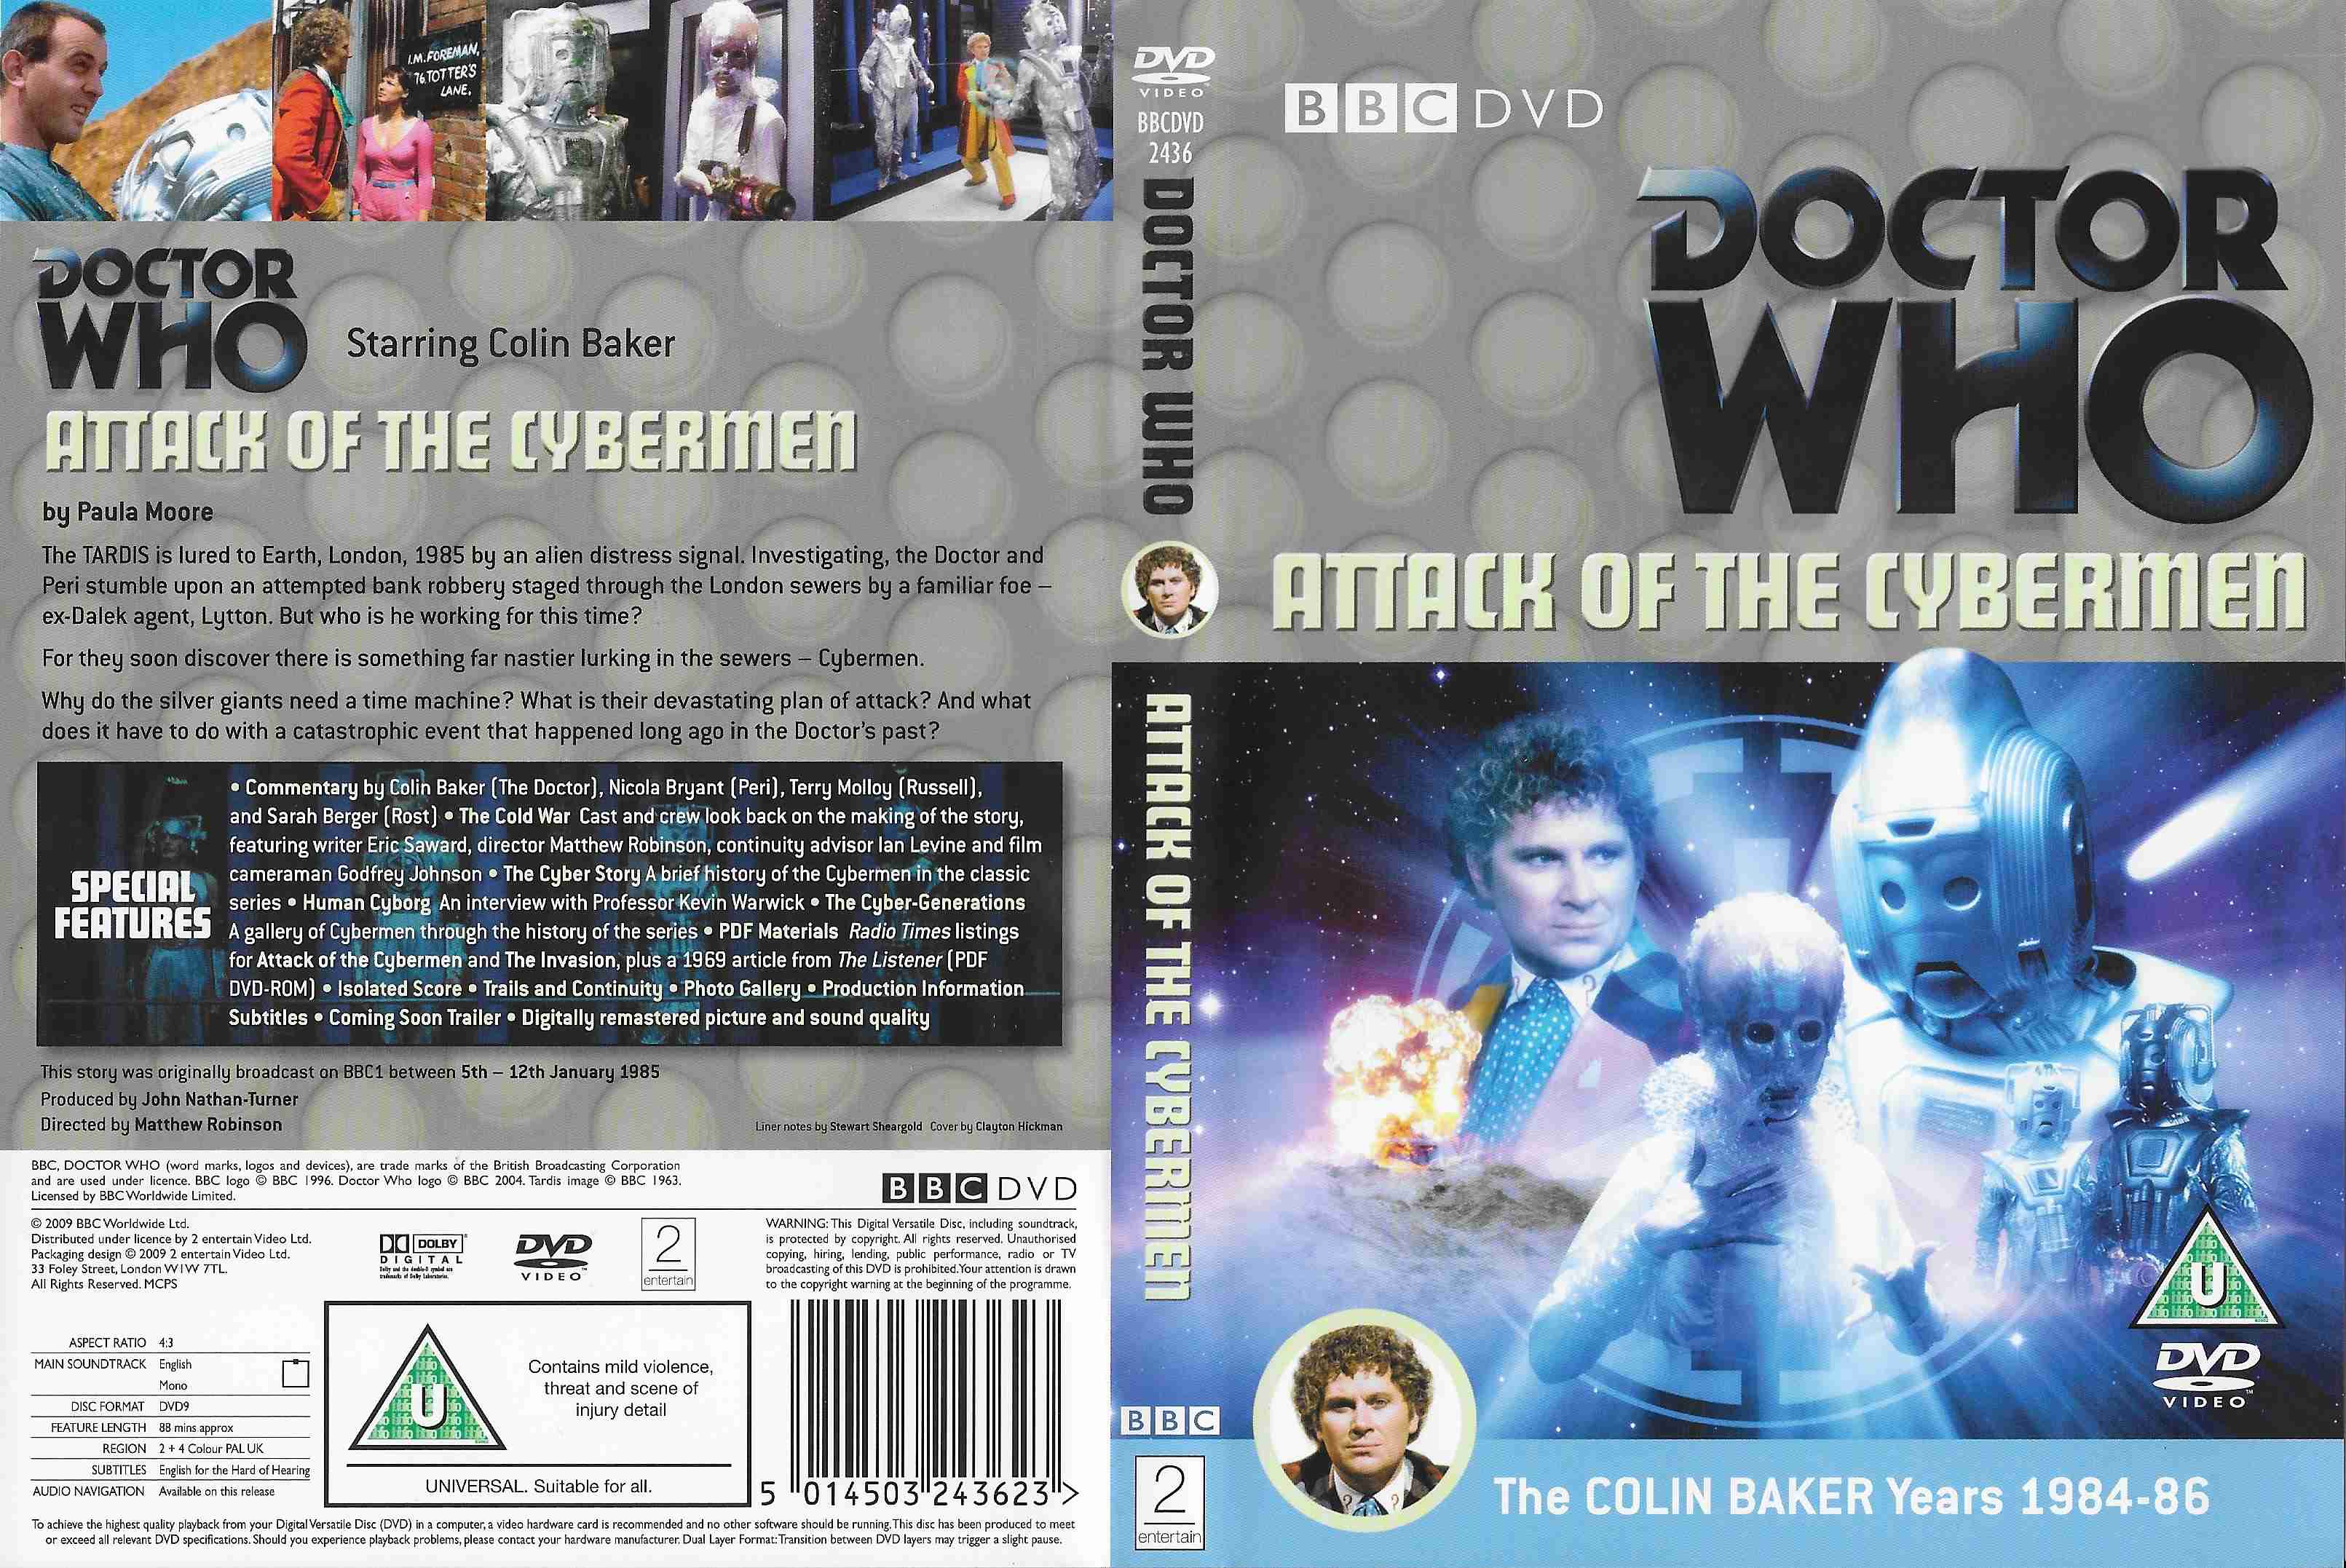 Back cover of BBCDVD 2436